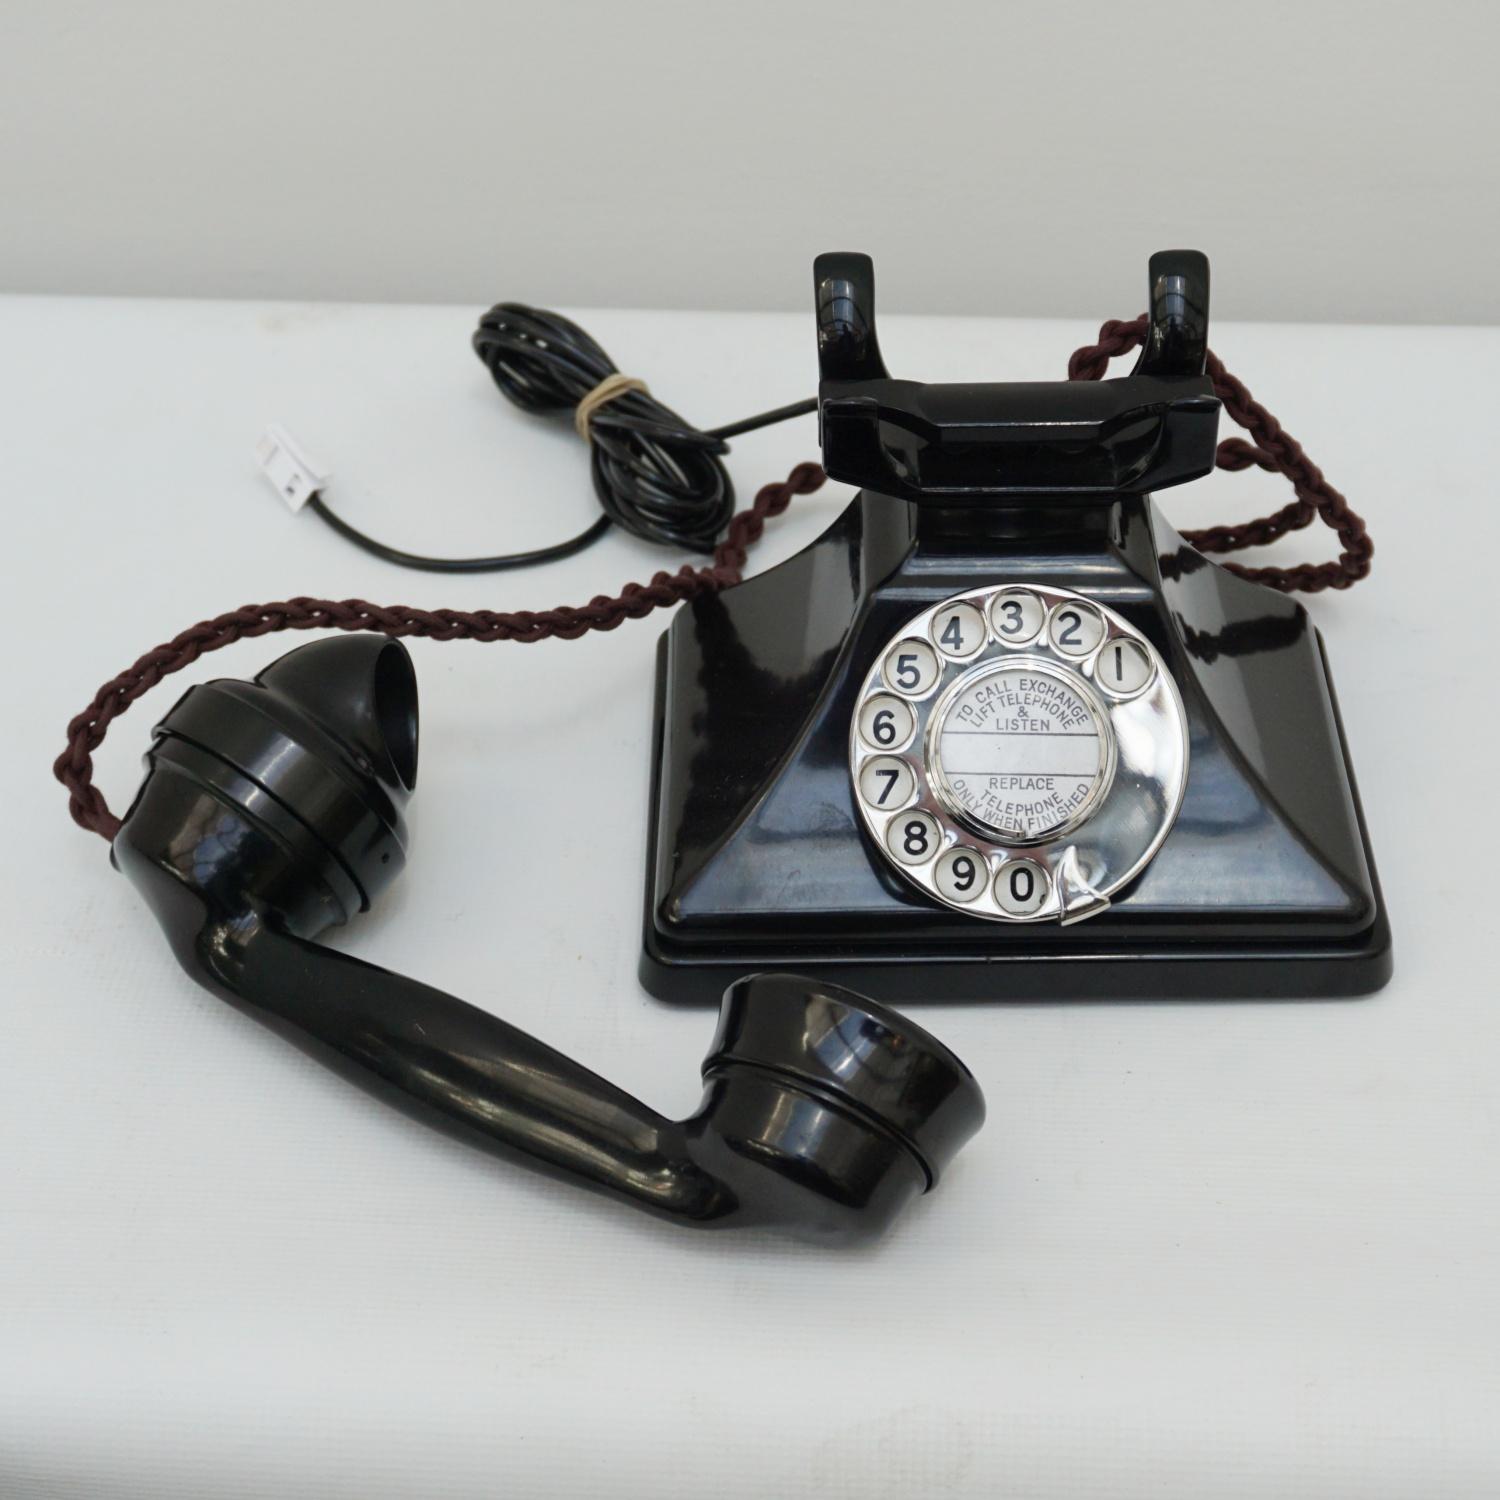 1934 phone